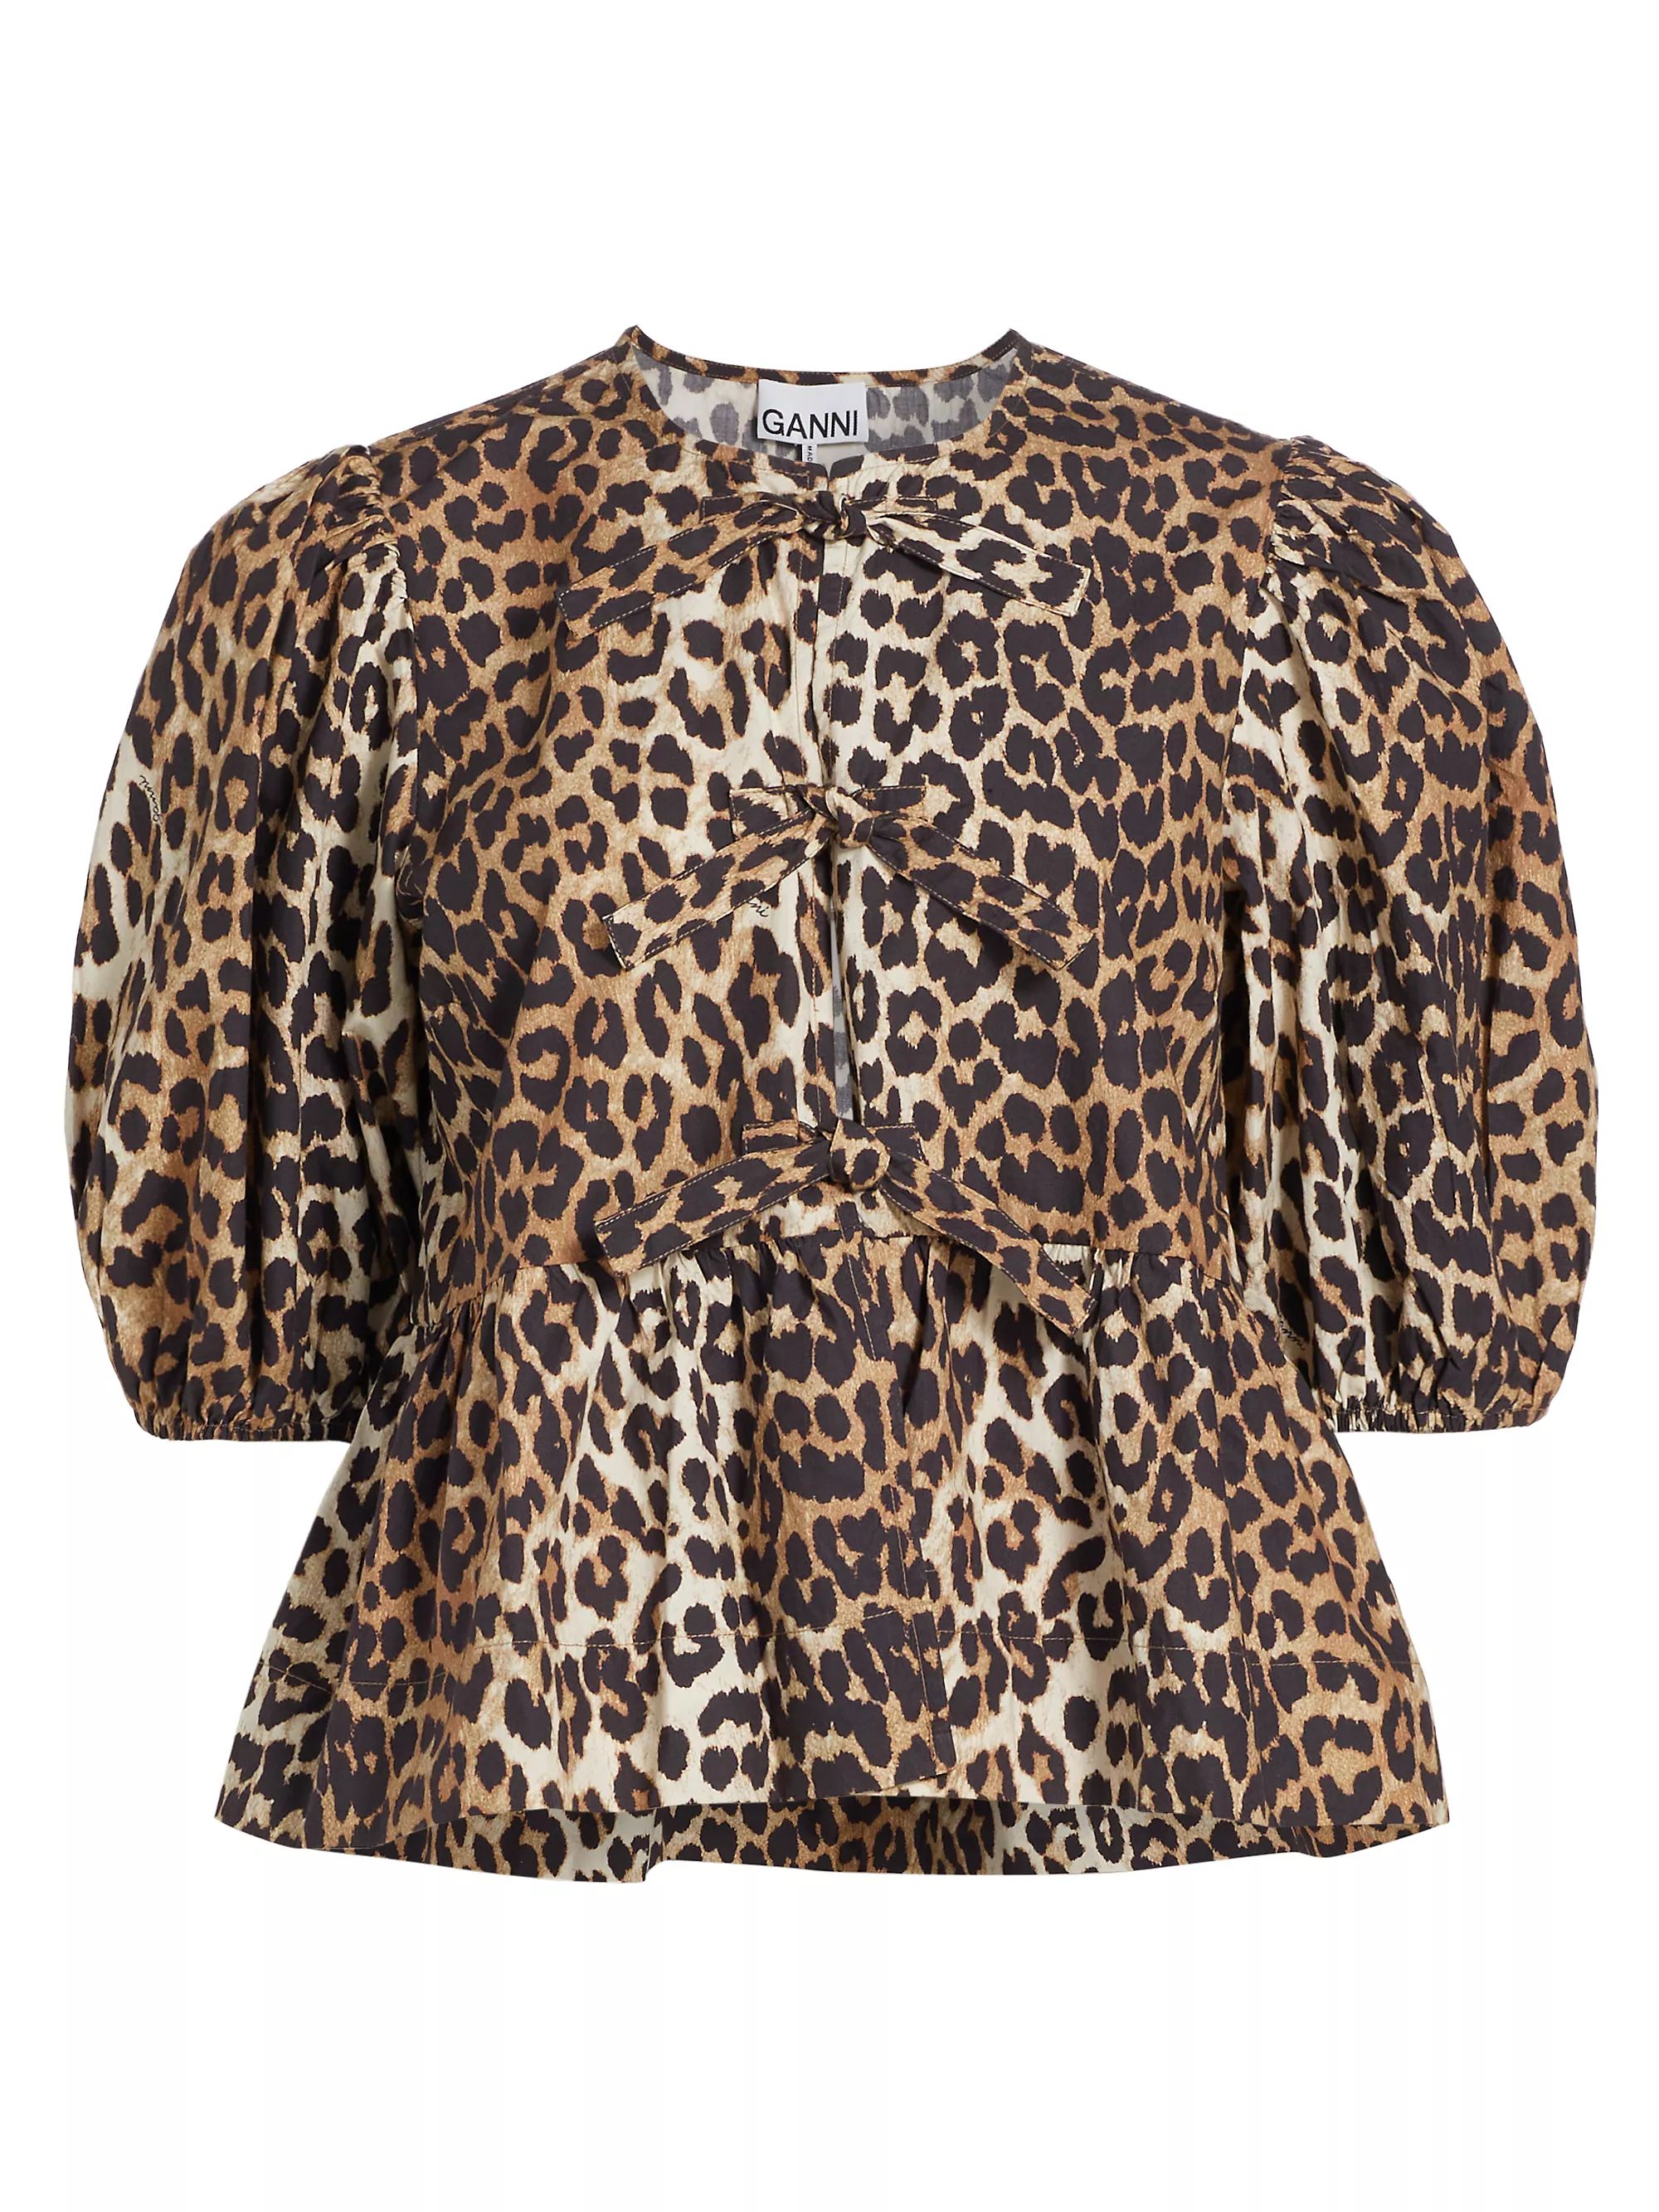 LeopardAll BlousesGanniLeopard Poplin Peplum Blouse$195
            
          20% Off $250+ with... | Saks Fifth Avenue